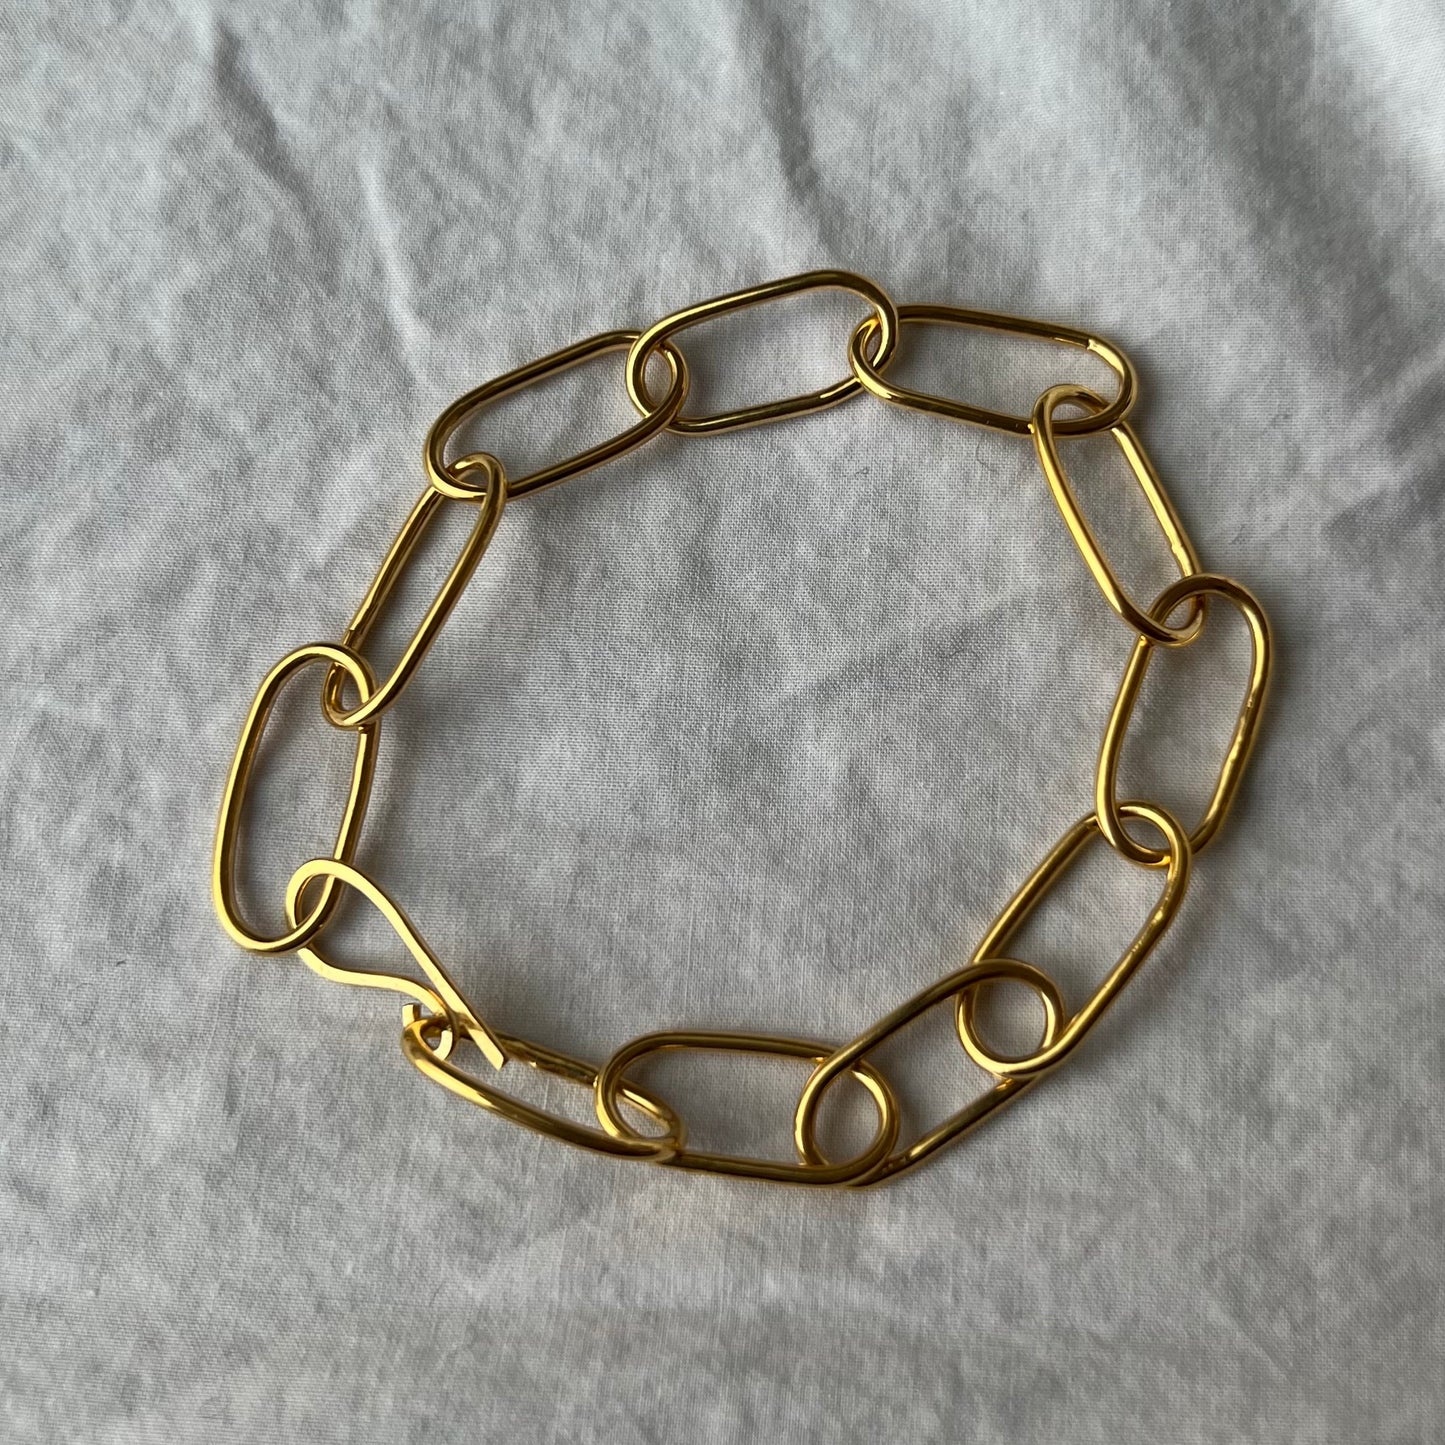 A handmade gold vermeil oval chain link bracelet.